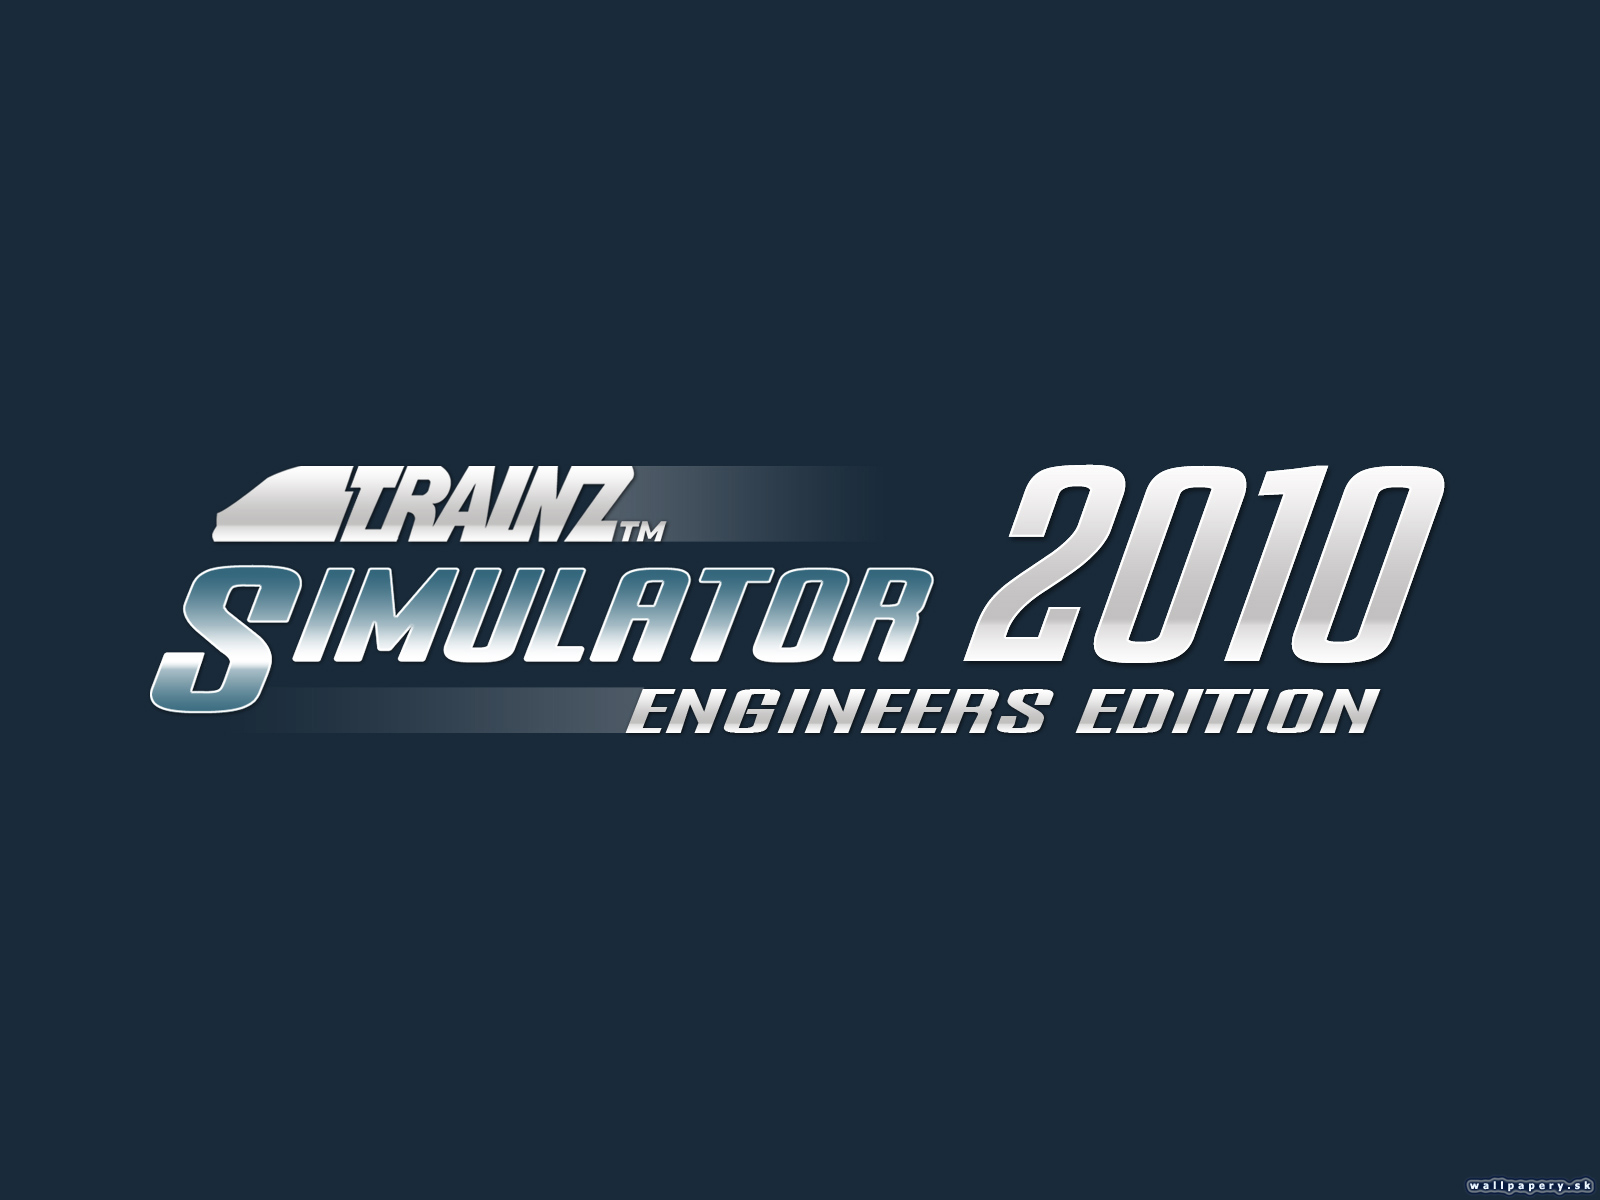 Trainz Simulator 2010: Engineers Edition - wallpaper 4